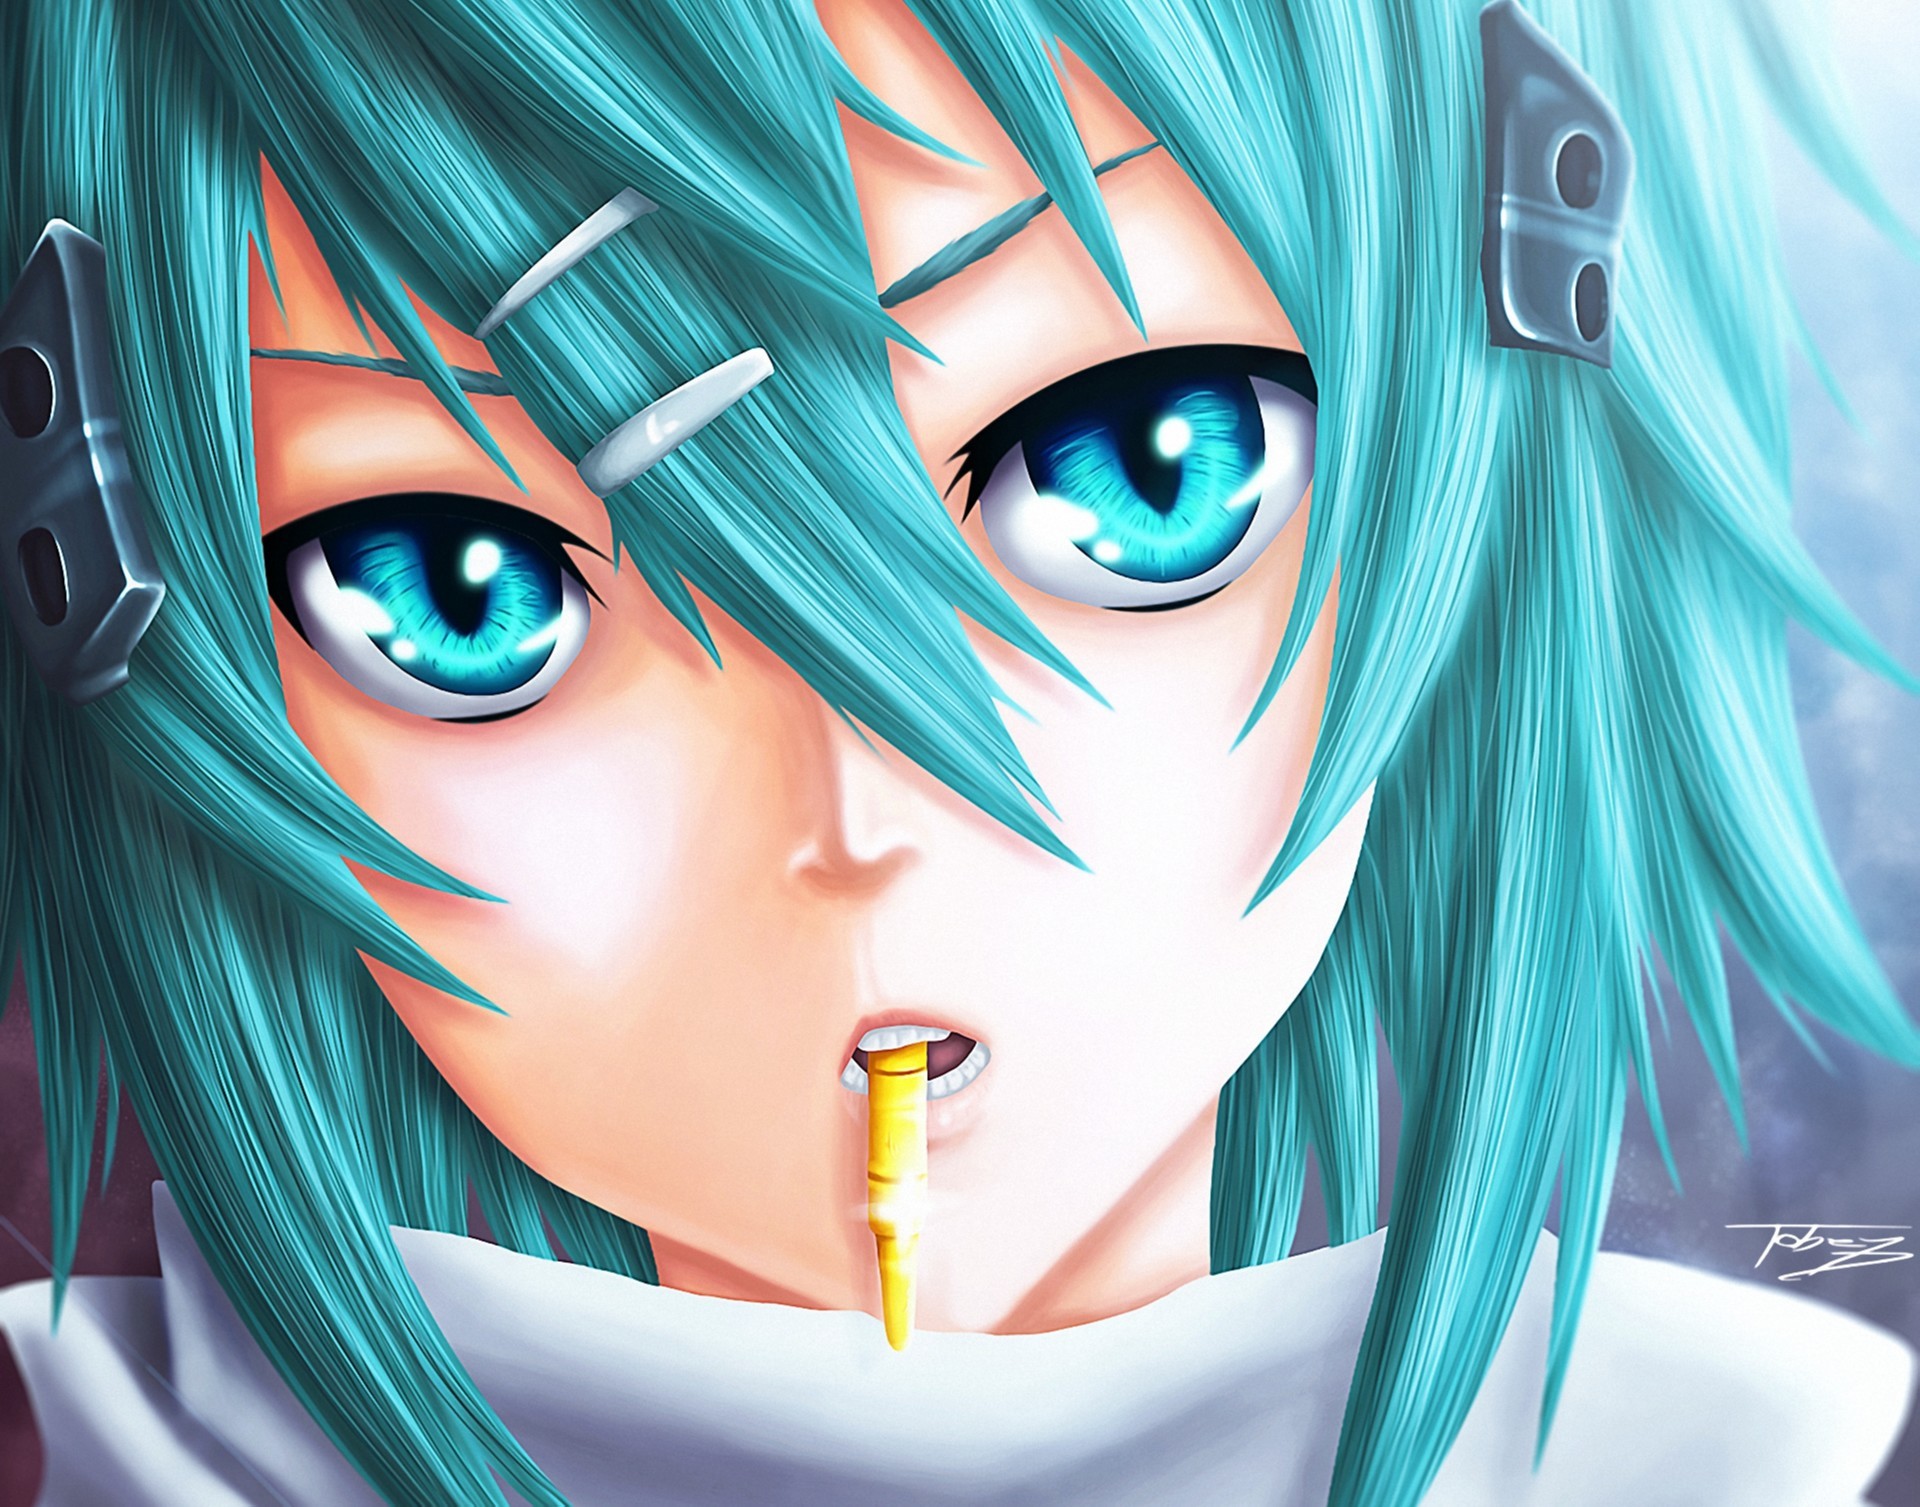 Anime Sword Art Online II HD Wallpaper | Background Image